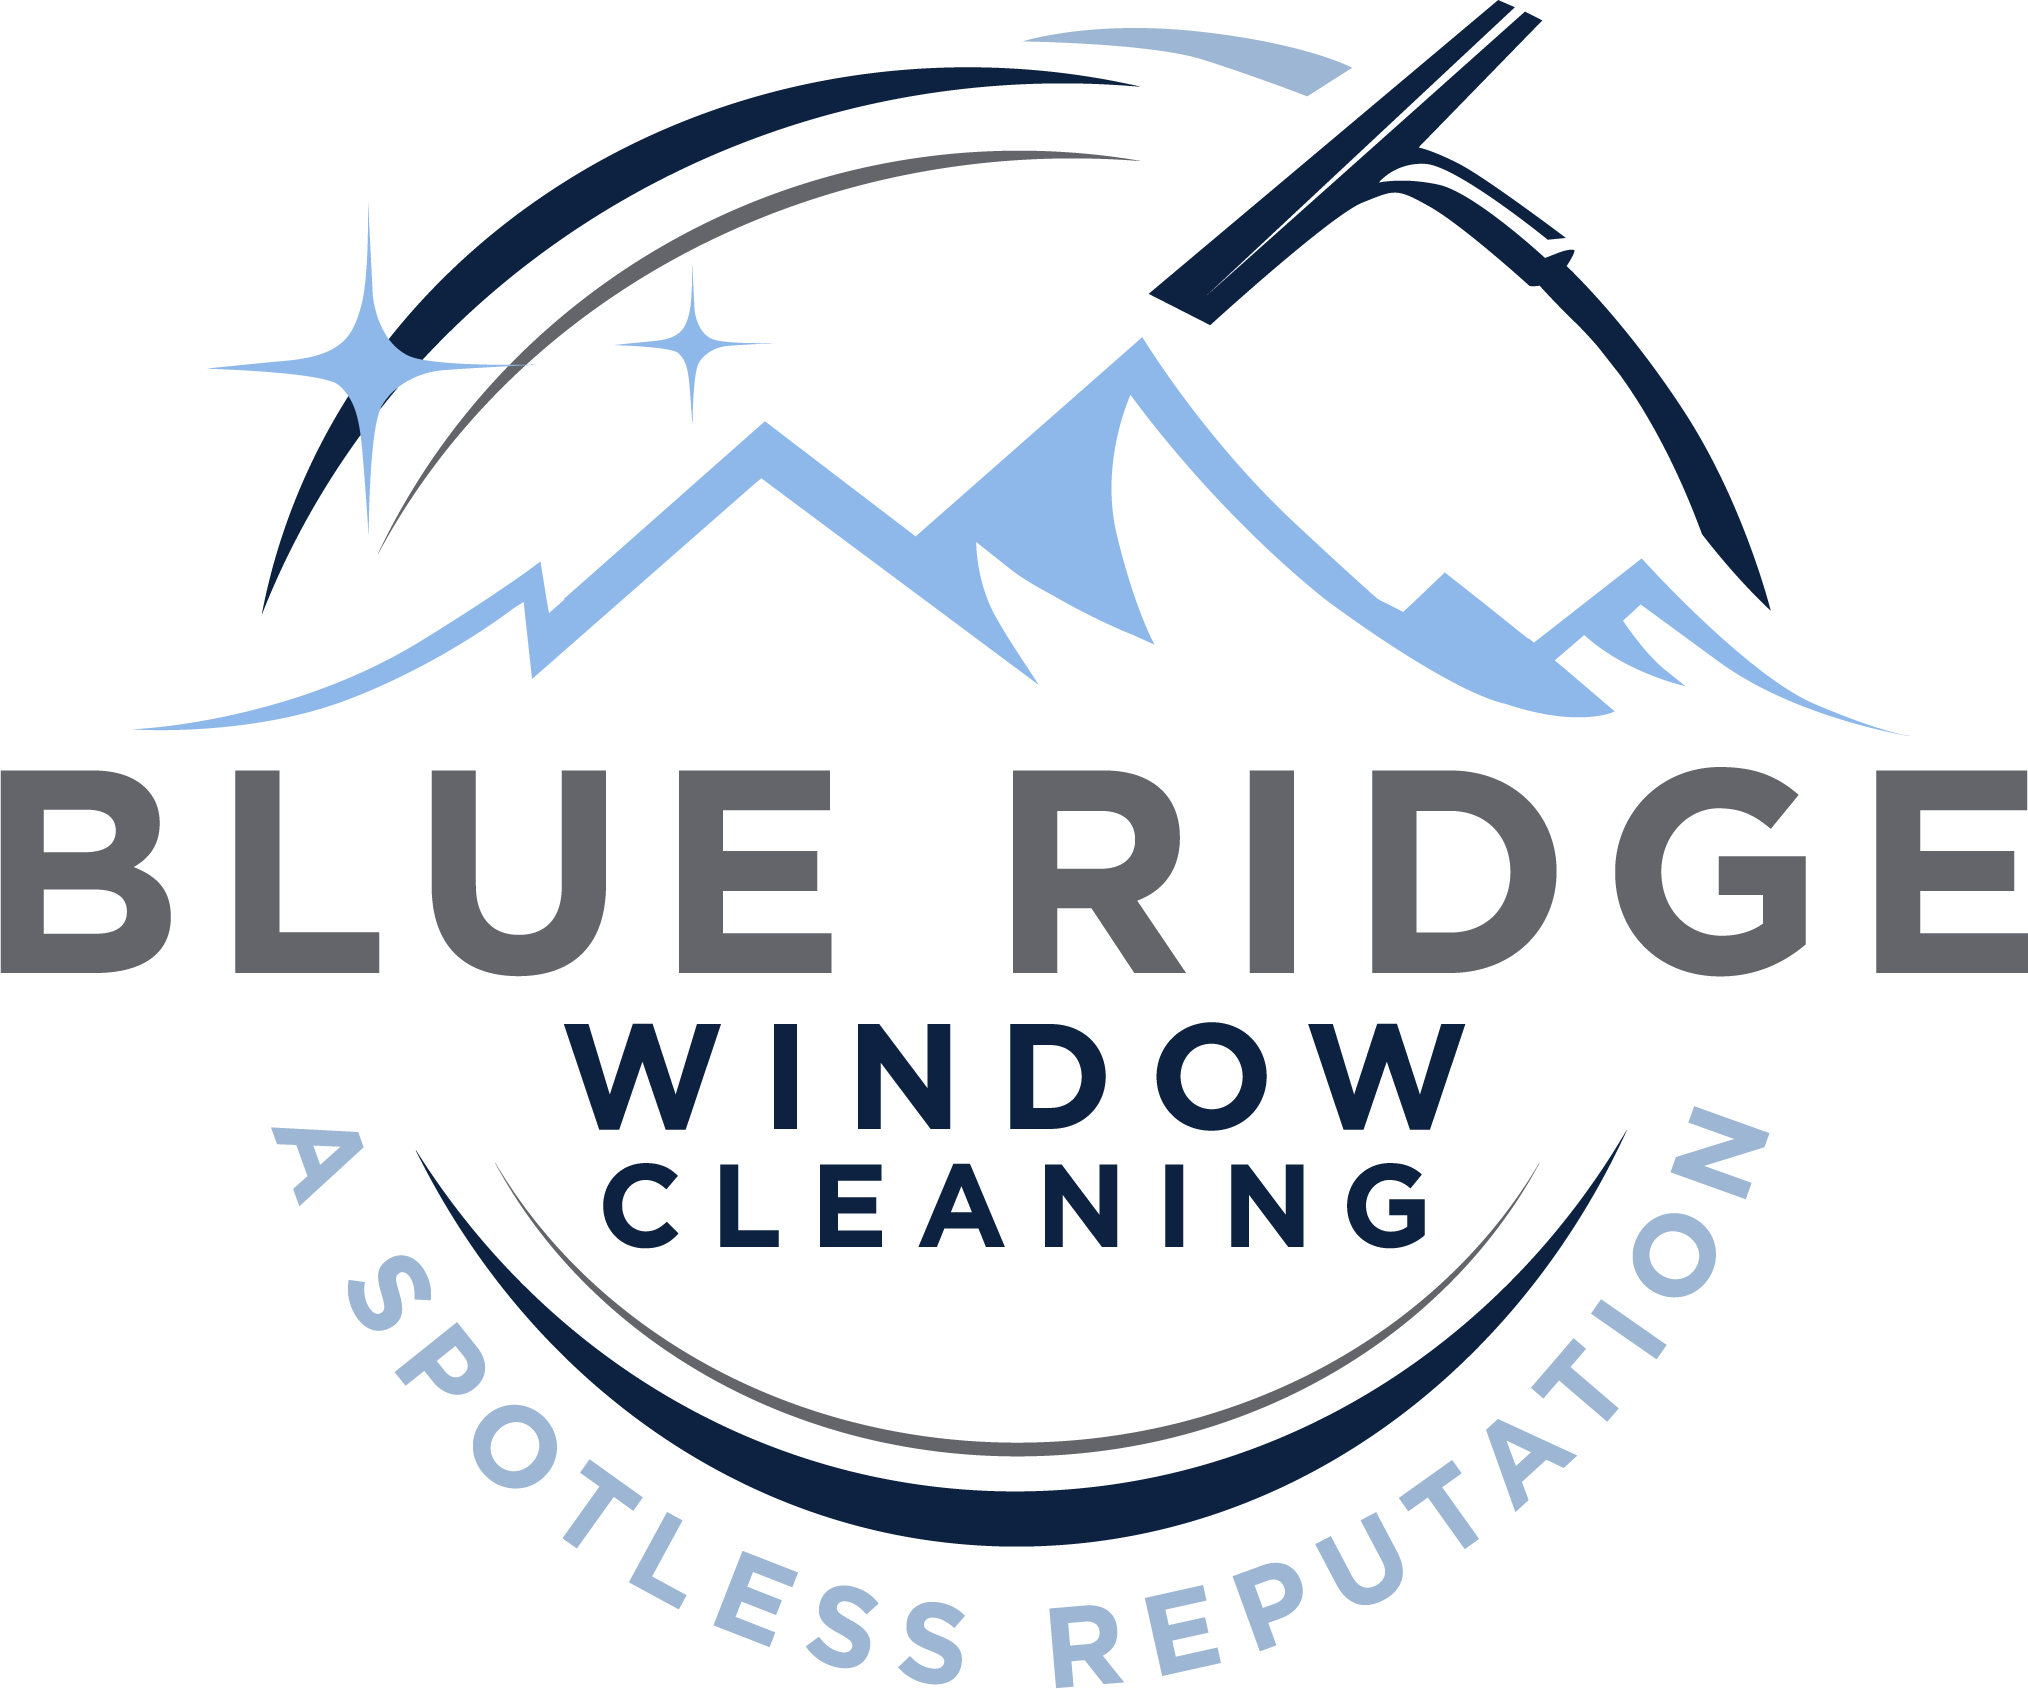 Window Cleaning in Texarkana AR